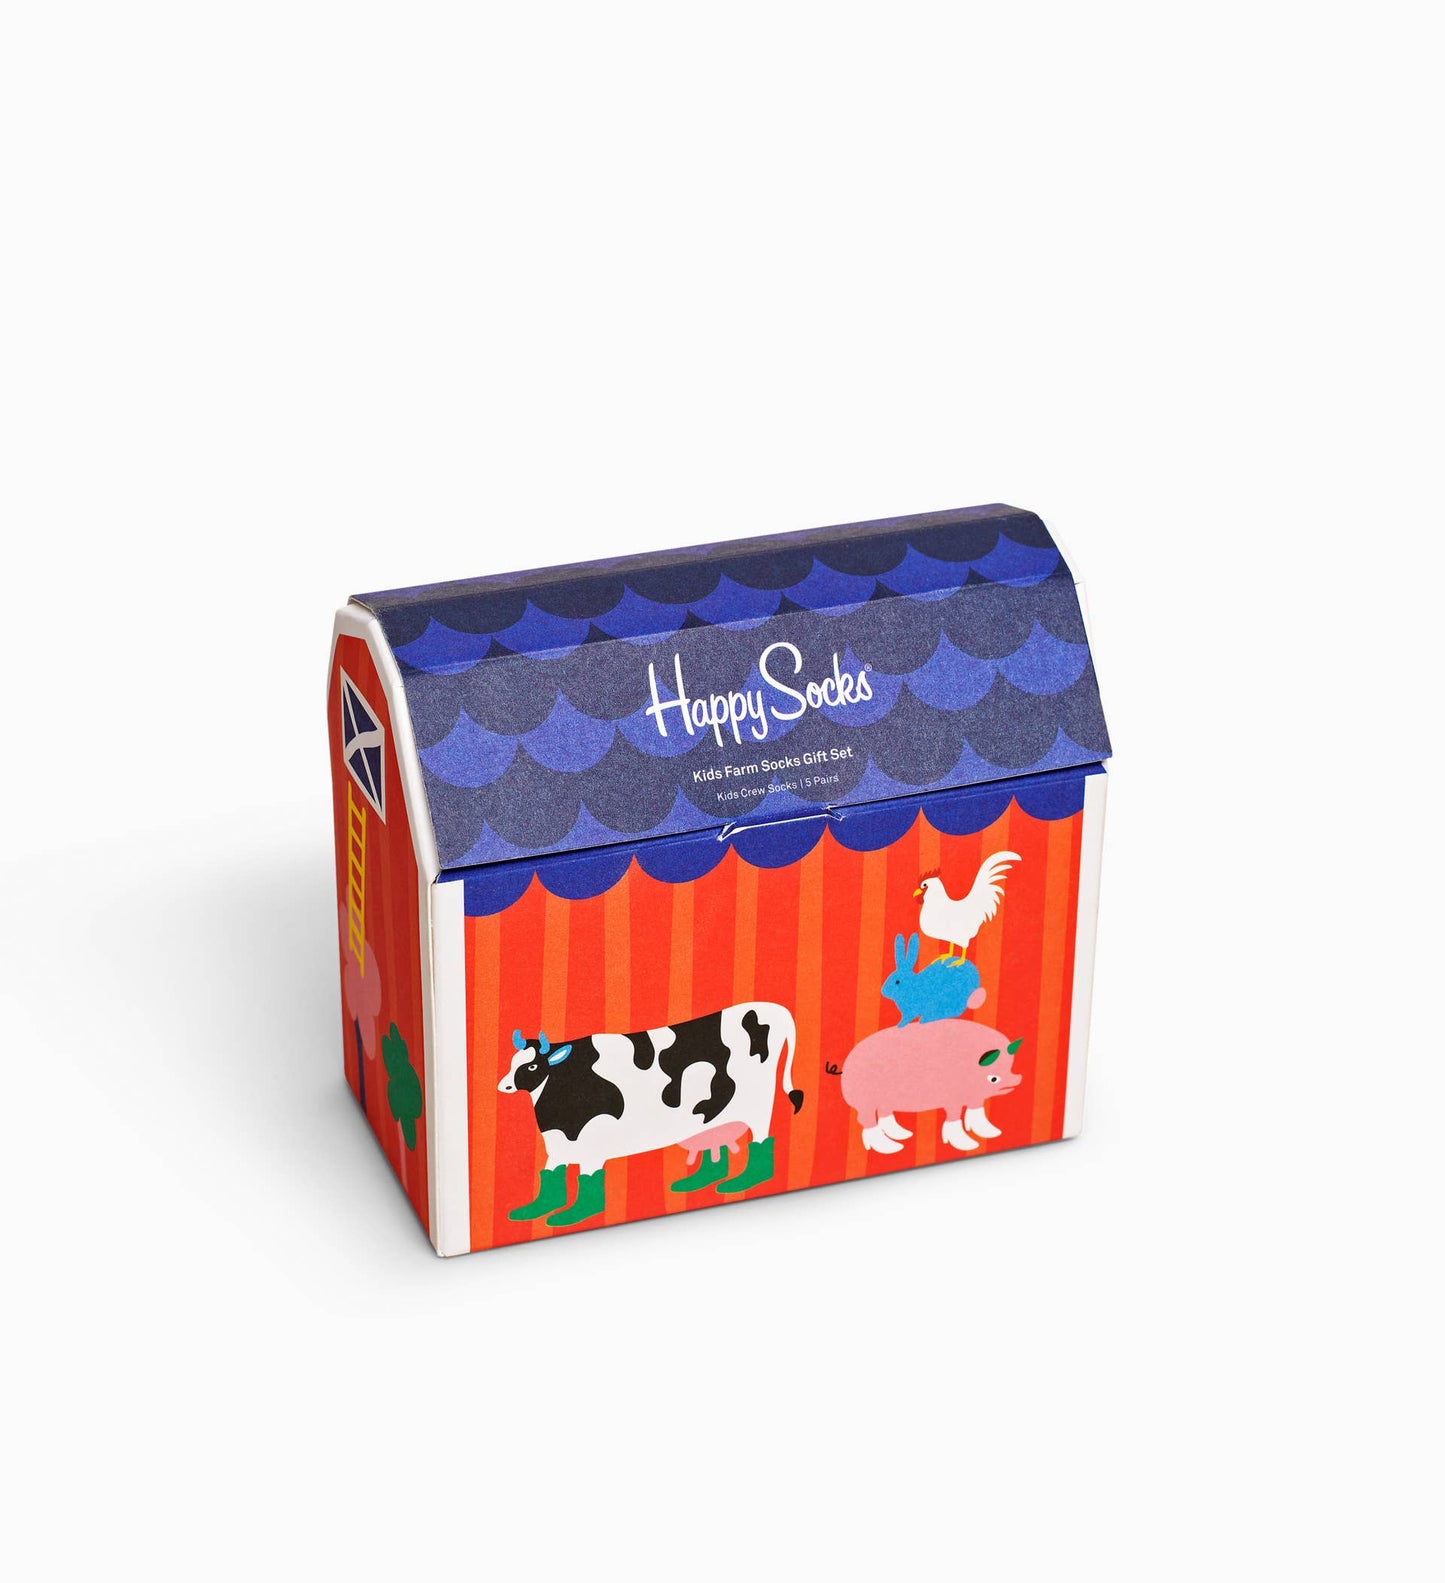 Calze Happy Socks Kids Farm Socks Gift Set -XKFAR44-0200